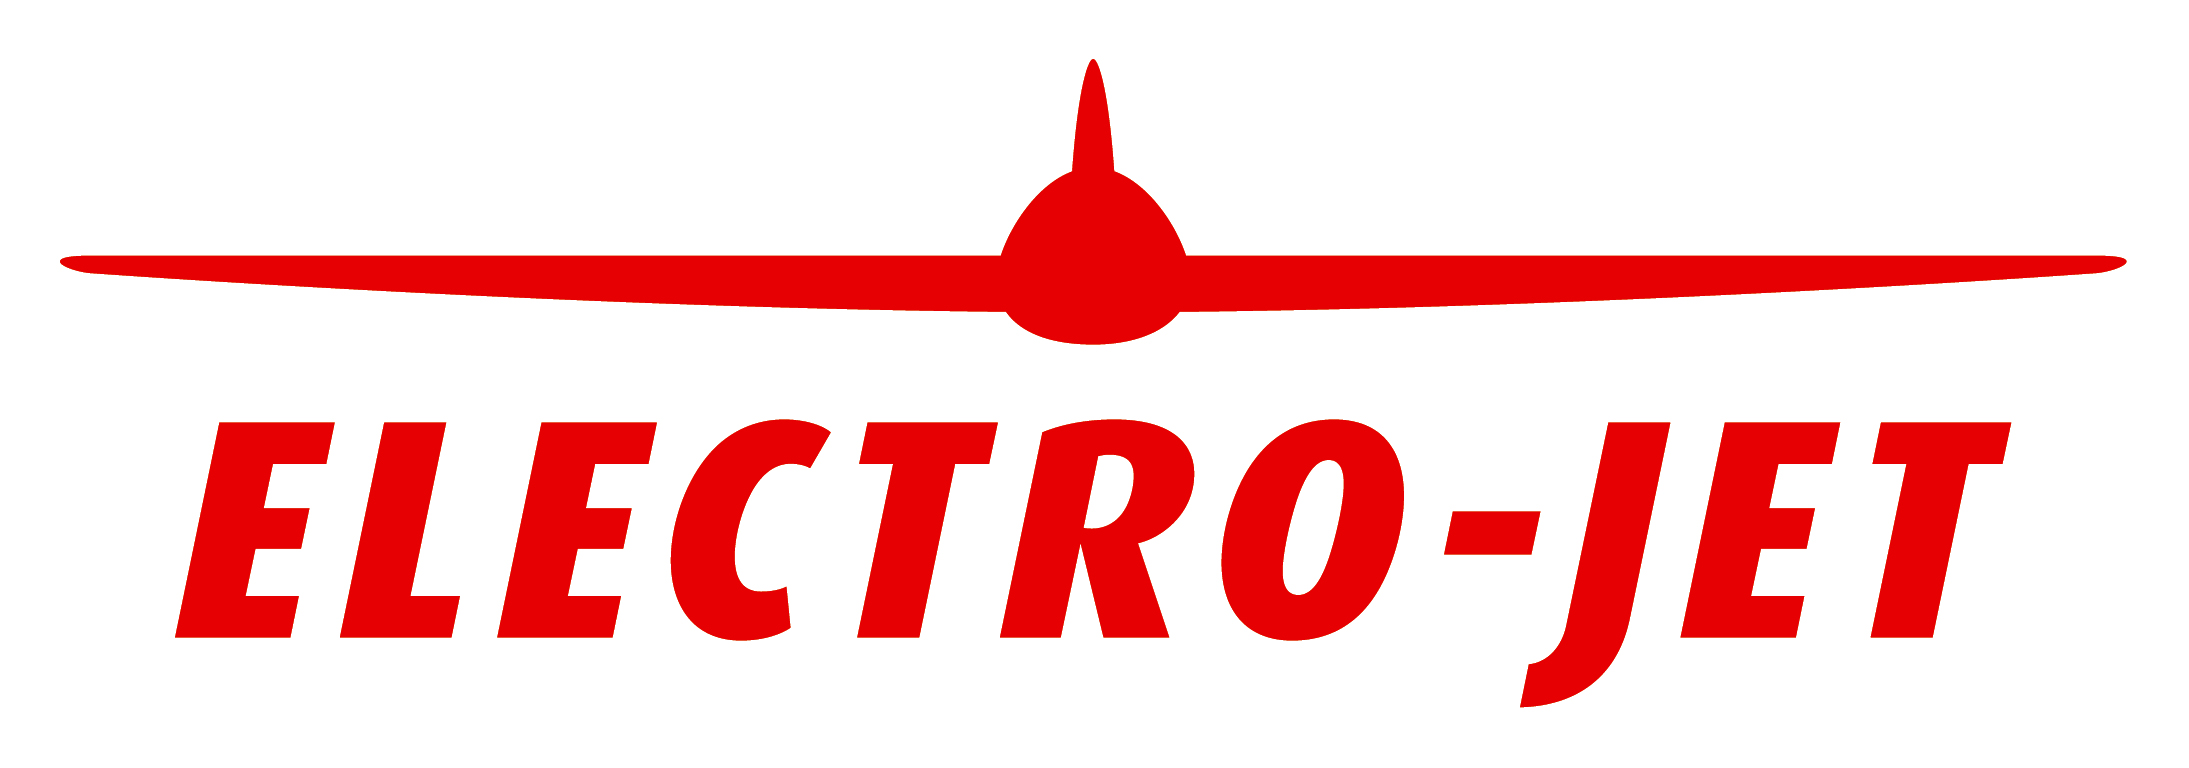 electro-jet-logo.jpg